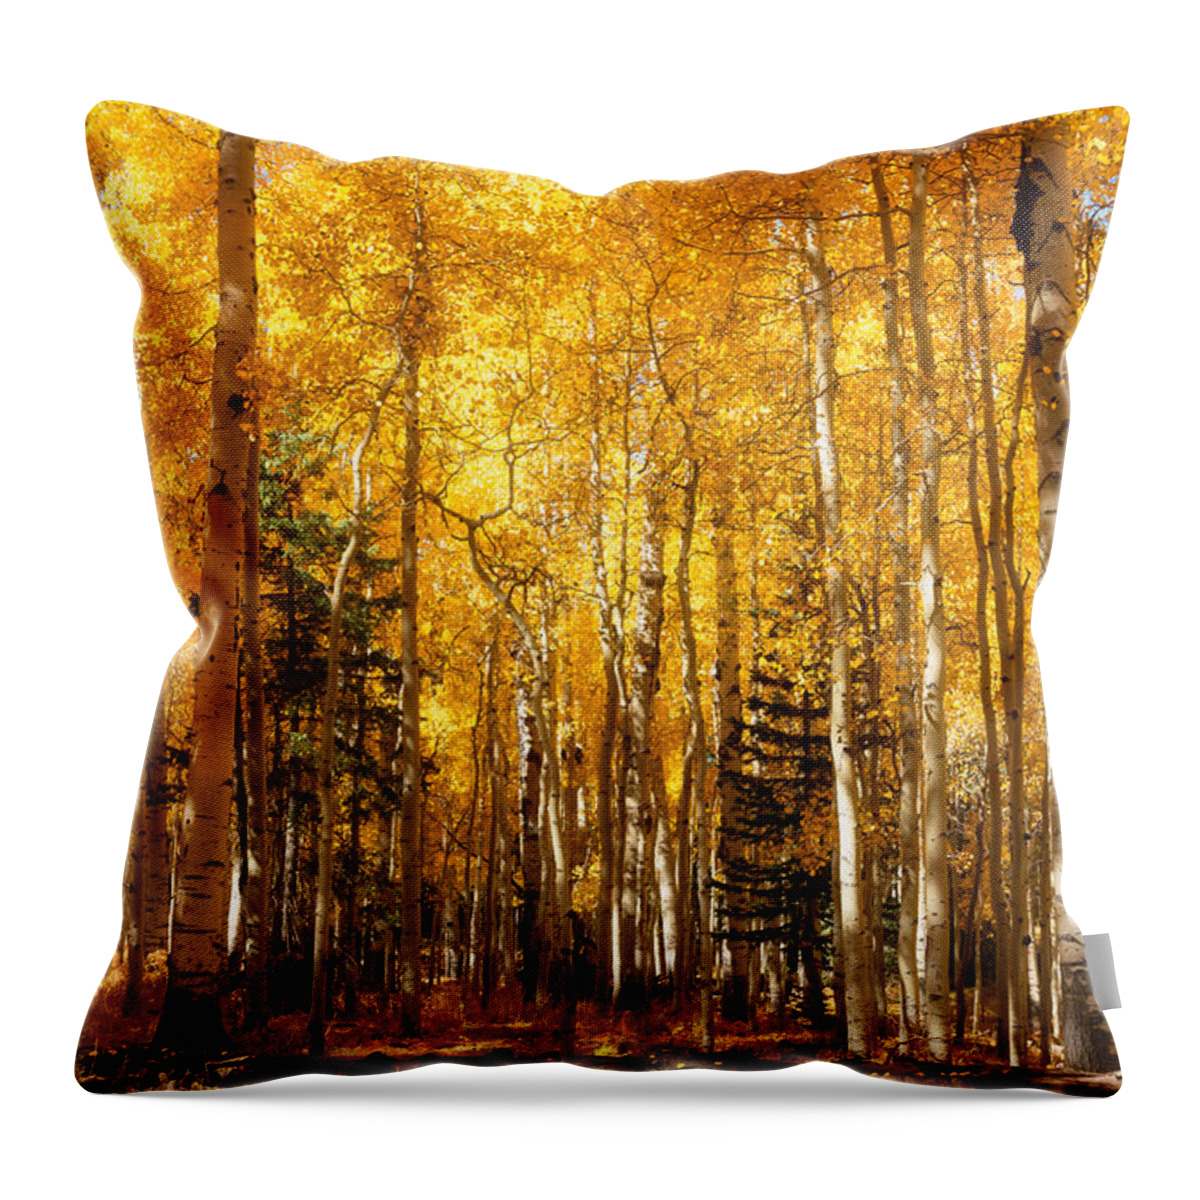 Aspen Grove Throw Pillow featuring the photograph A Walk In The Autumn Gold by Saija Lehtonen